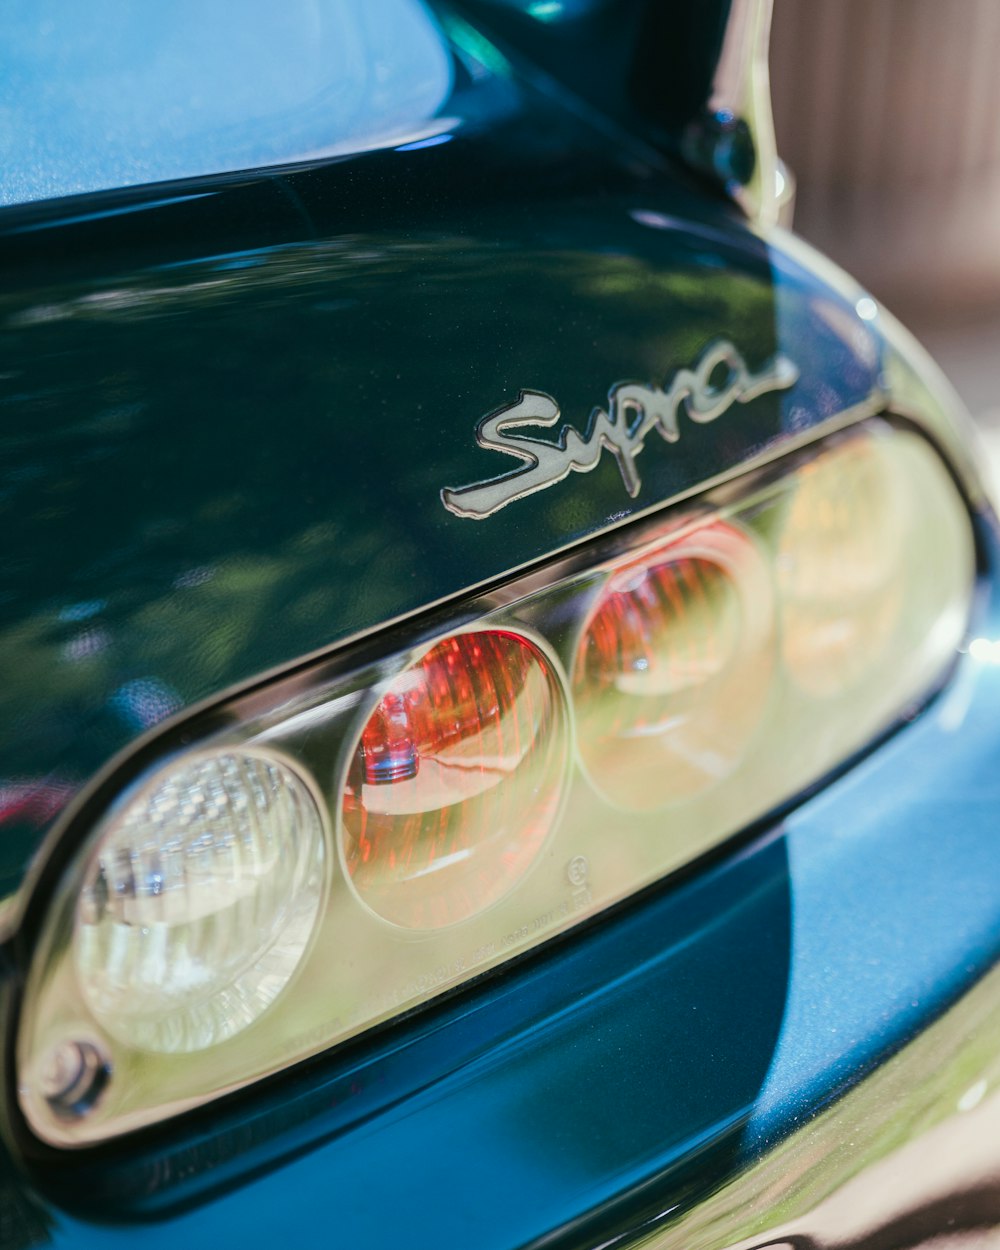 a close up of a car's tail light